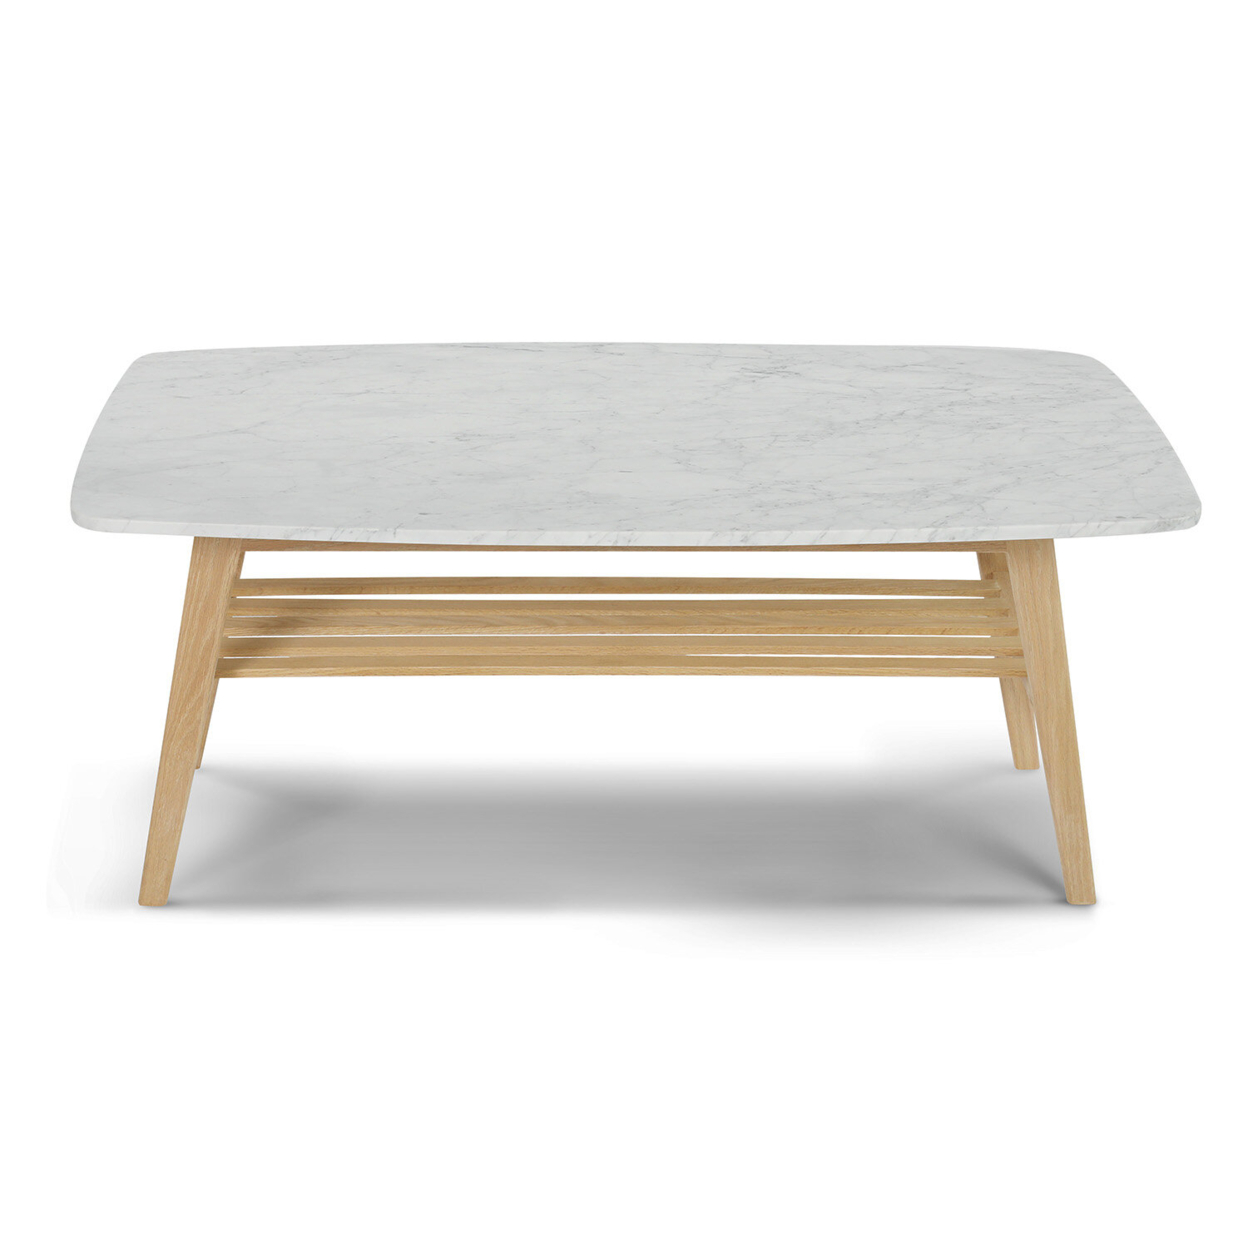 Laura 43" Rectangular Italian Carrara White Marble Coffee Table with Shelf - oak